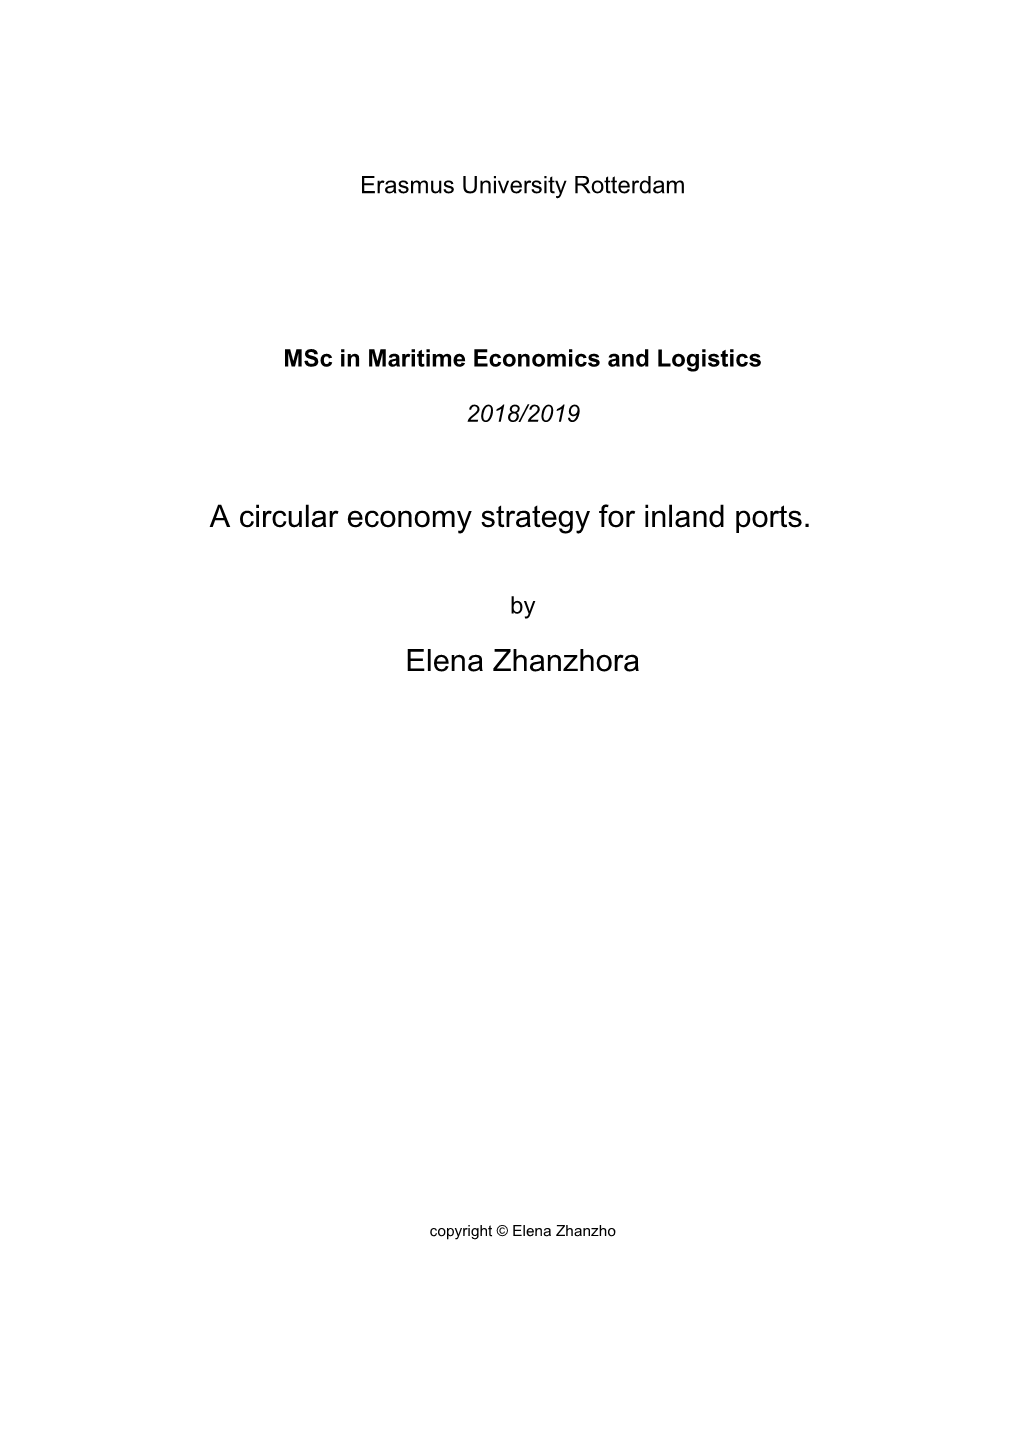 A Circular Economy Strategy for Inland Ports. Elena Zhanzhora